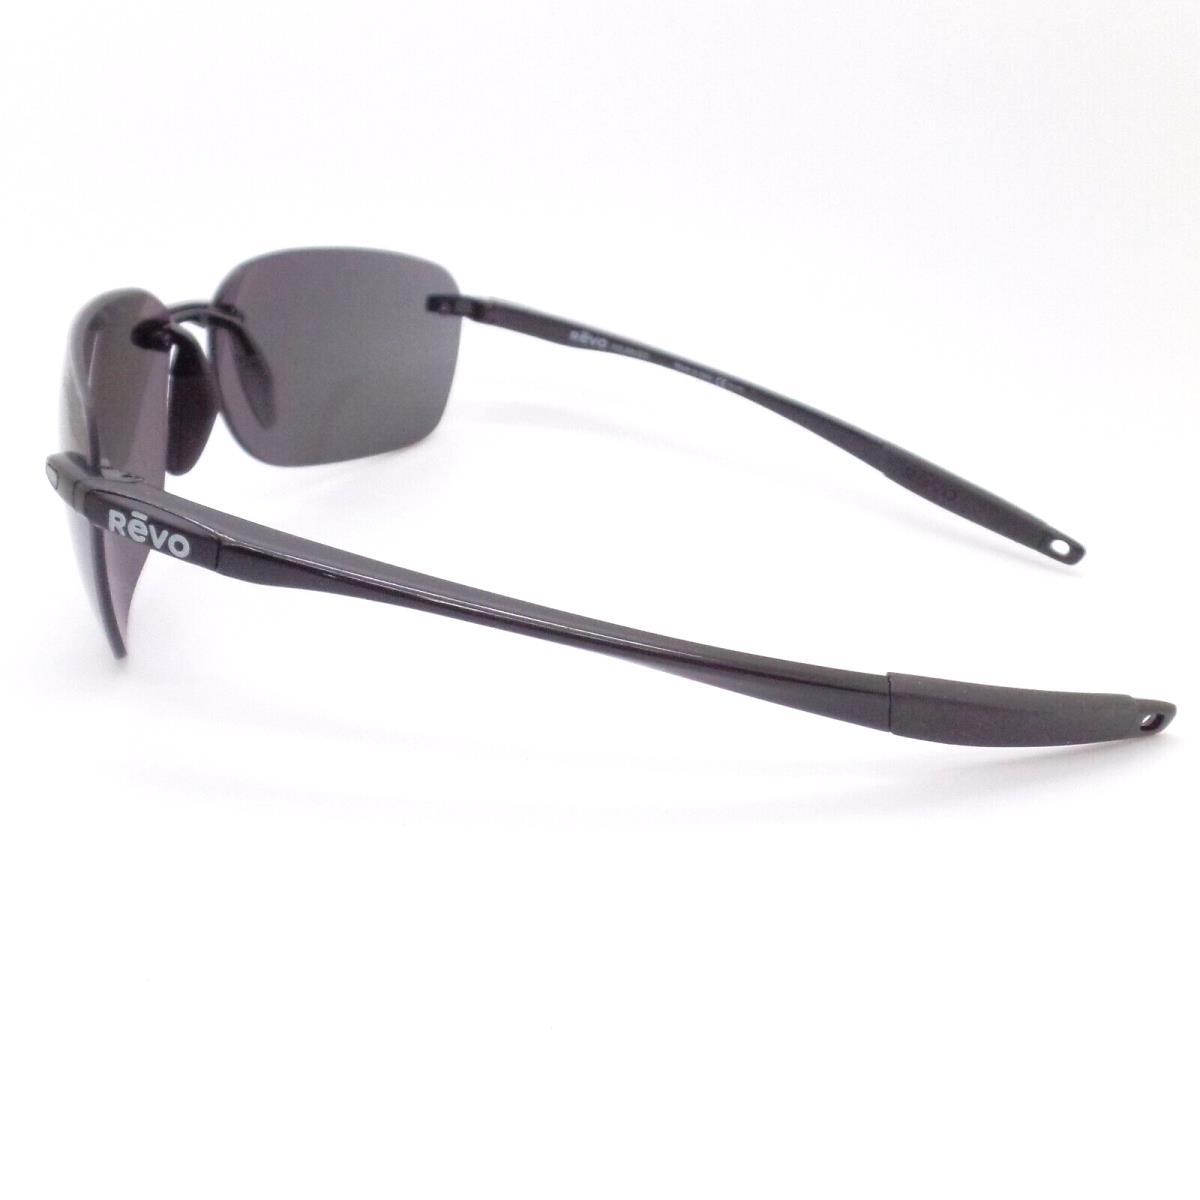 Revo sunglasses Descend - Black Frame, Graphite Lens 2